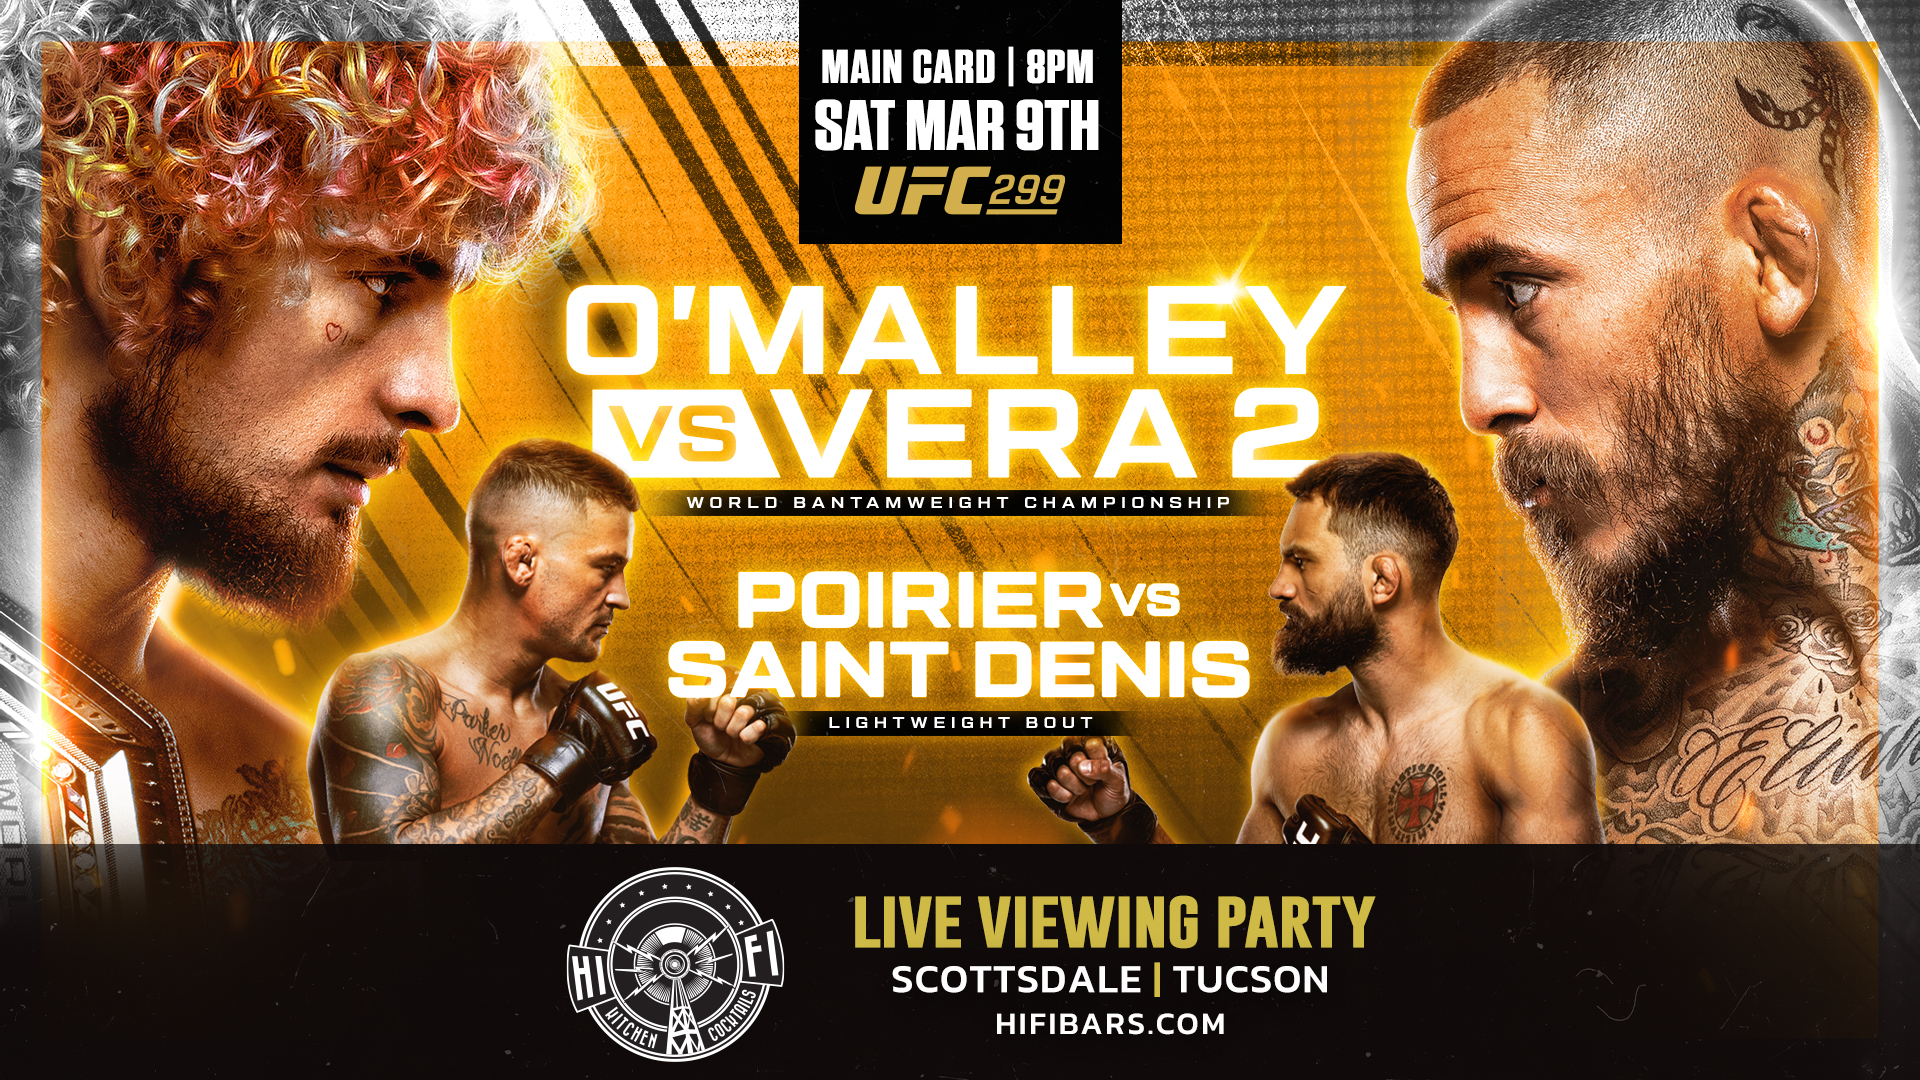 UFC 299 | O'Mally vs Vera 2 & Poirier vs Saint Denis. HI FI Live Viewing Party.